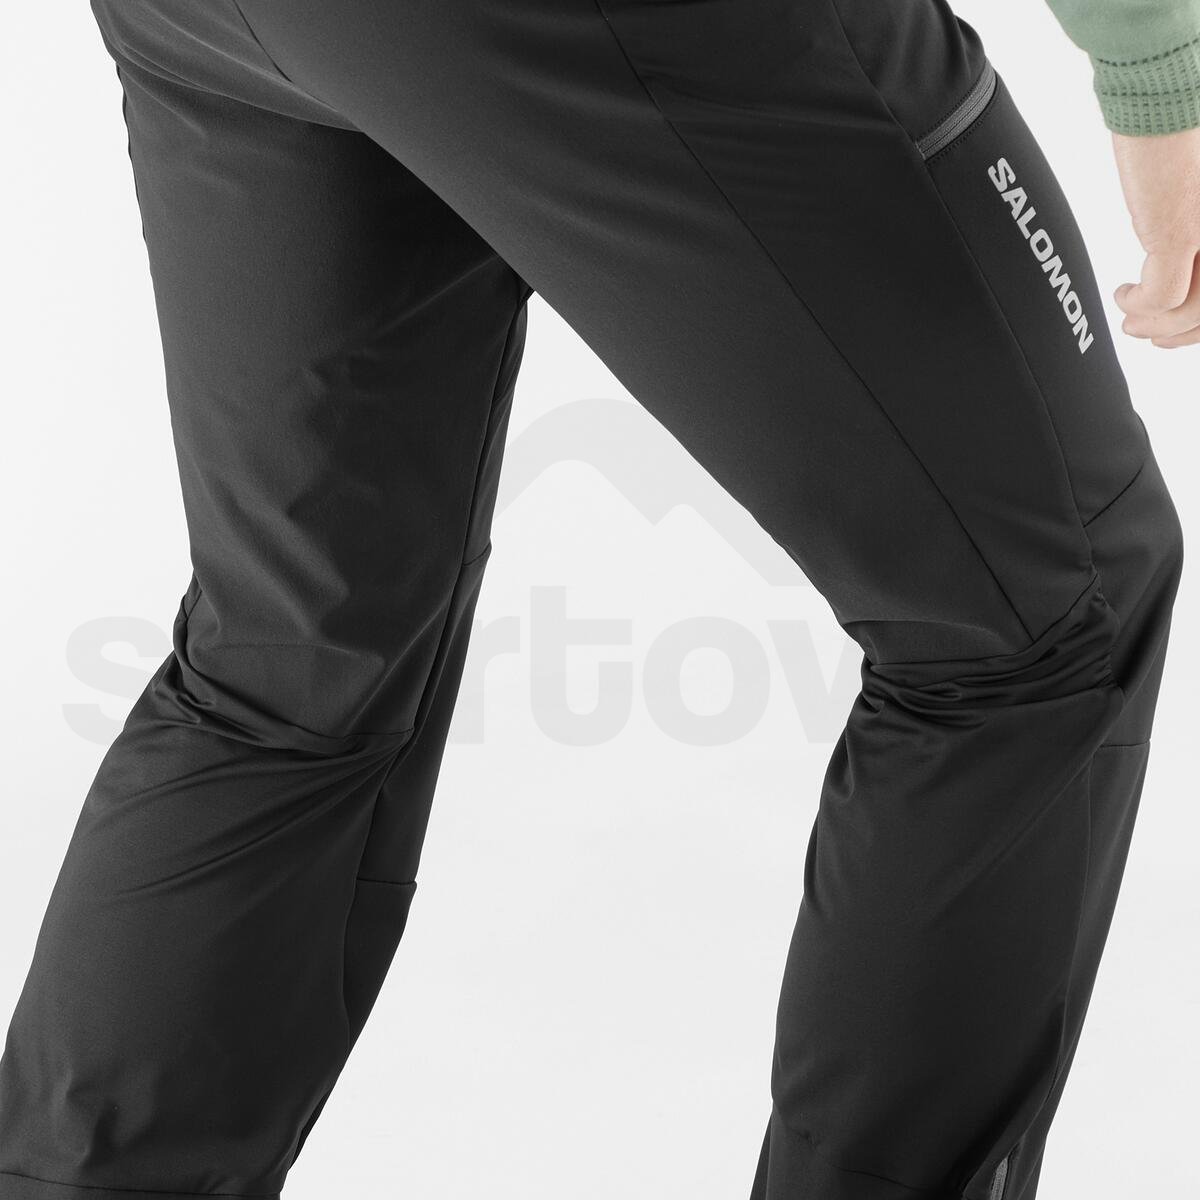 Kalhoty Salomon Mtn Softshell Pant M - černá